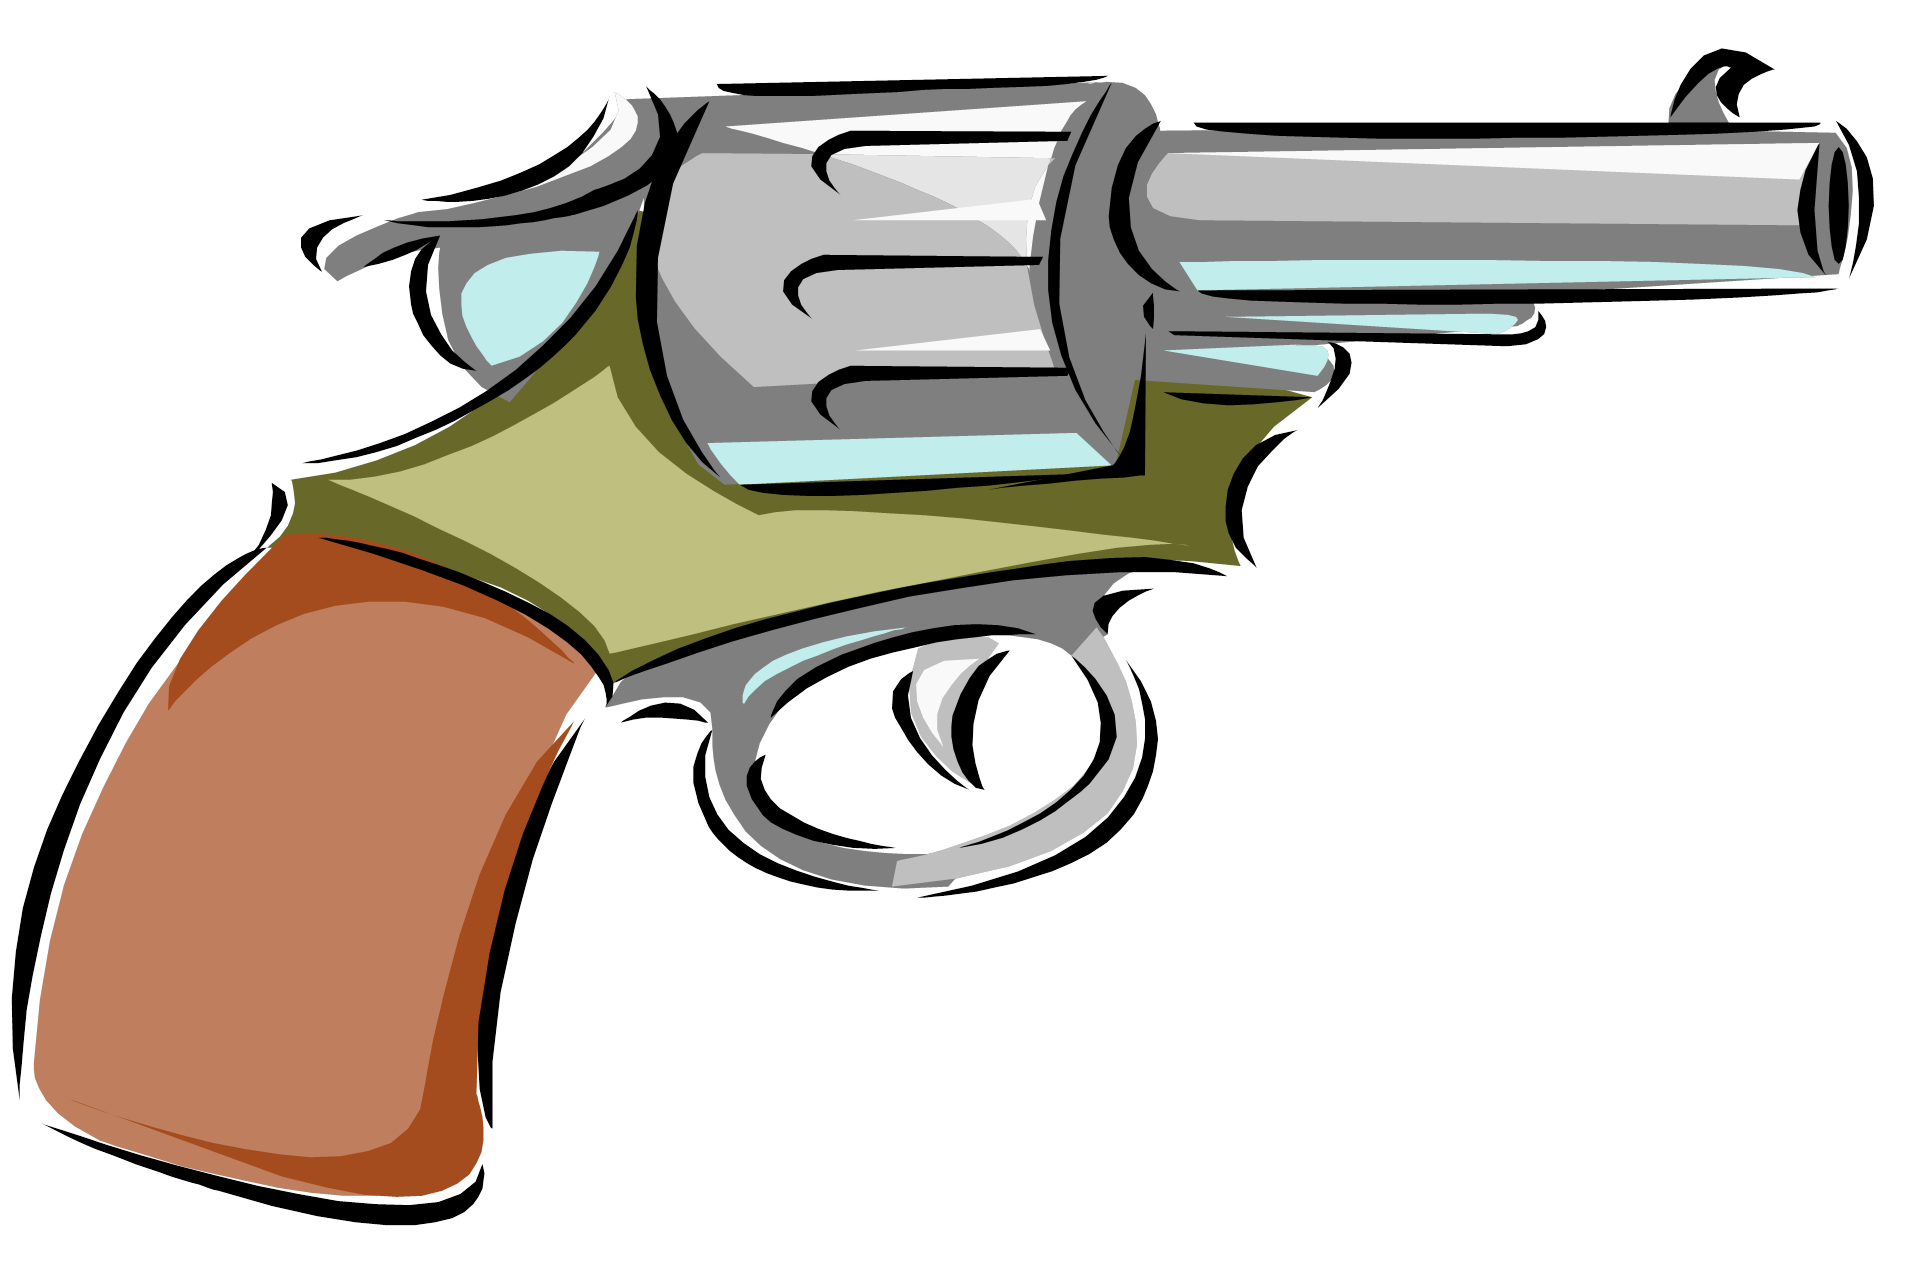 Free Cartoon Gun Cliparts, Download Free Cartoon Gun Cliparts png images, Free ClipArts on